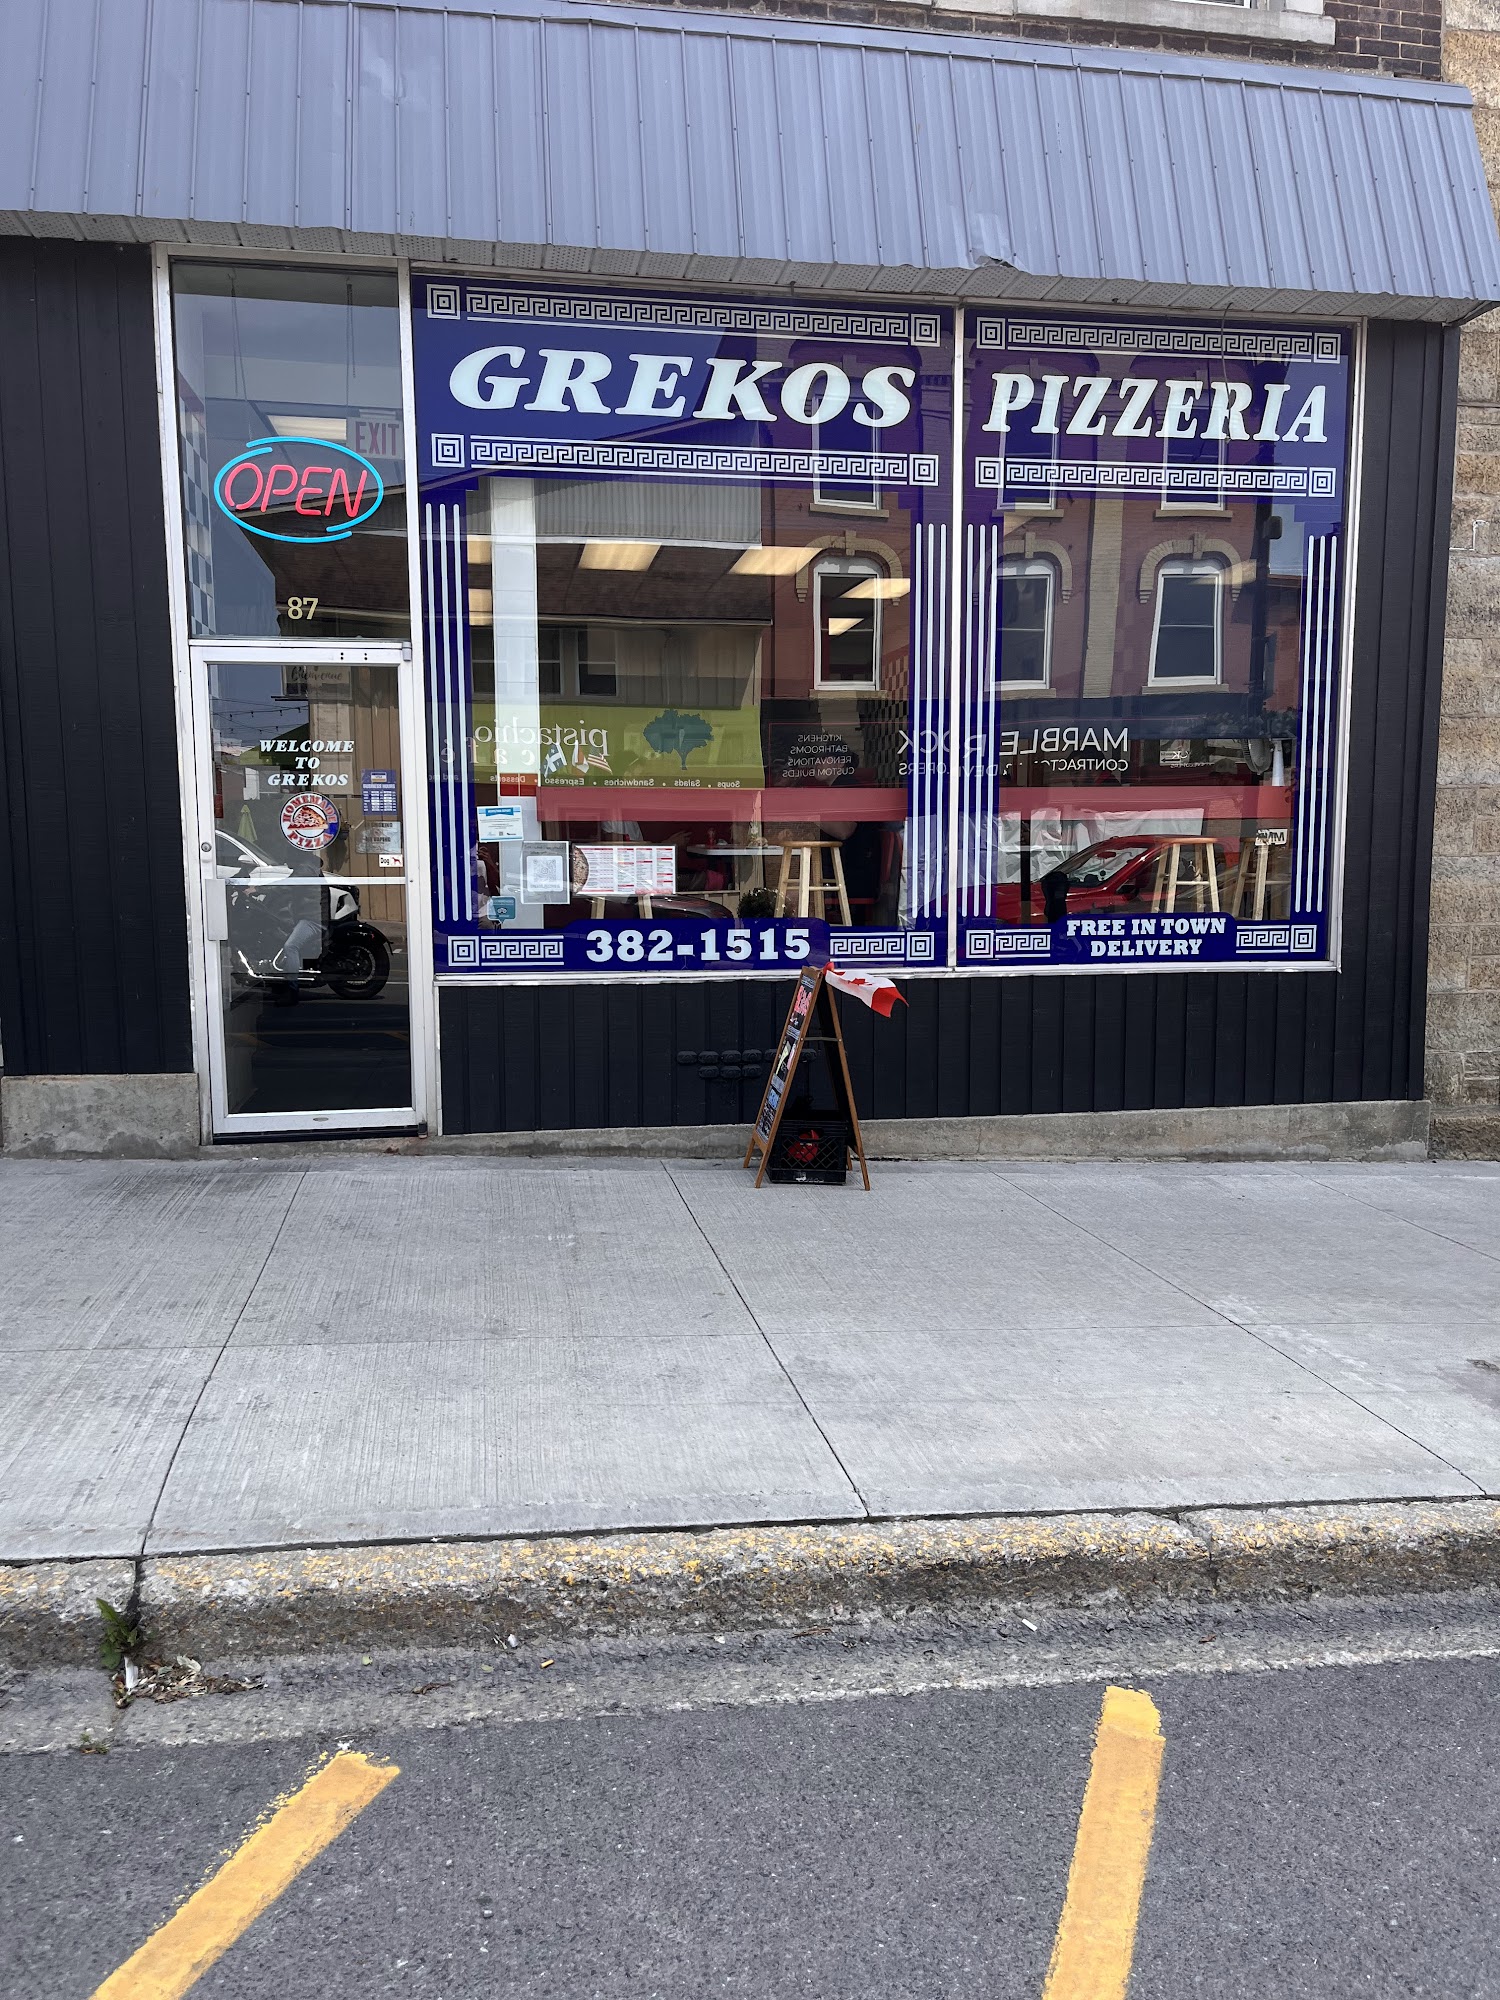 Grekos Pizzeria